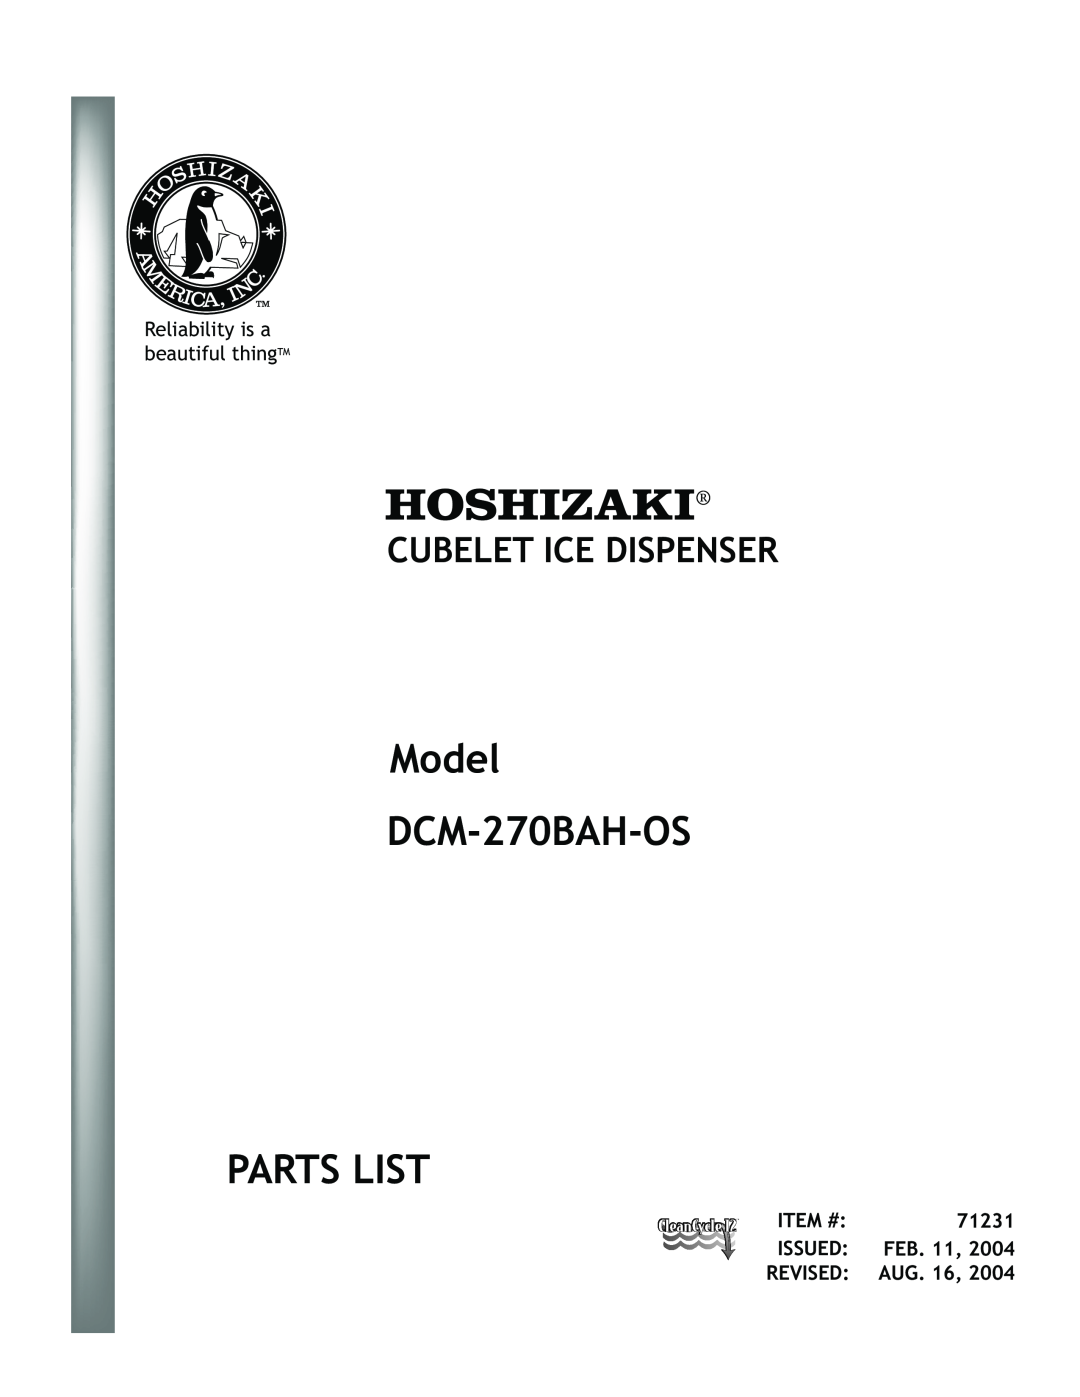 Hoshizaki DCM-270BAH-OS instruction manual Cubelet Ice Dispenser, Reliability is a beautiful thingTM 